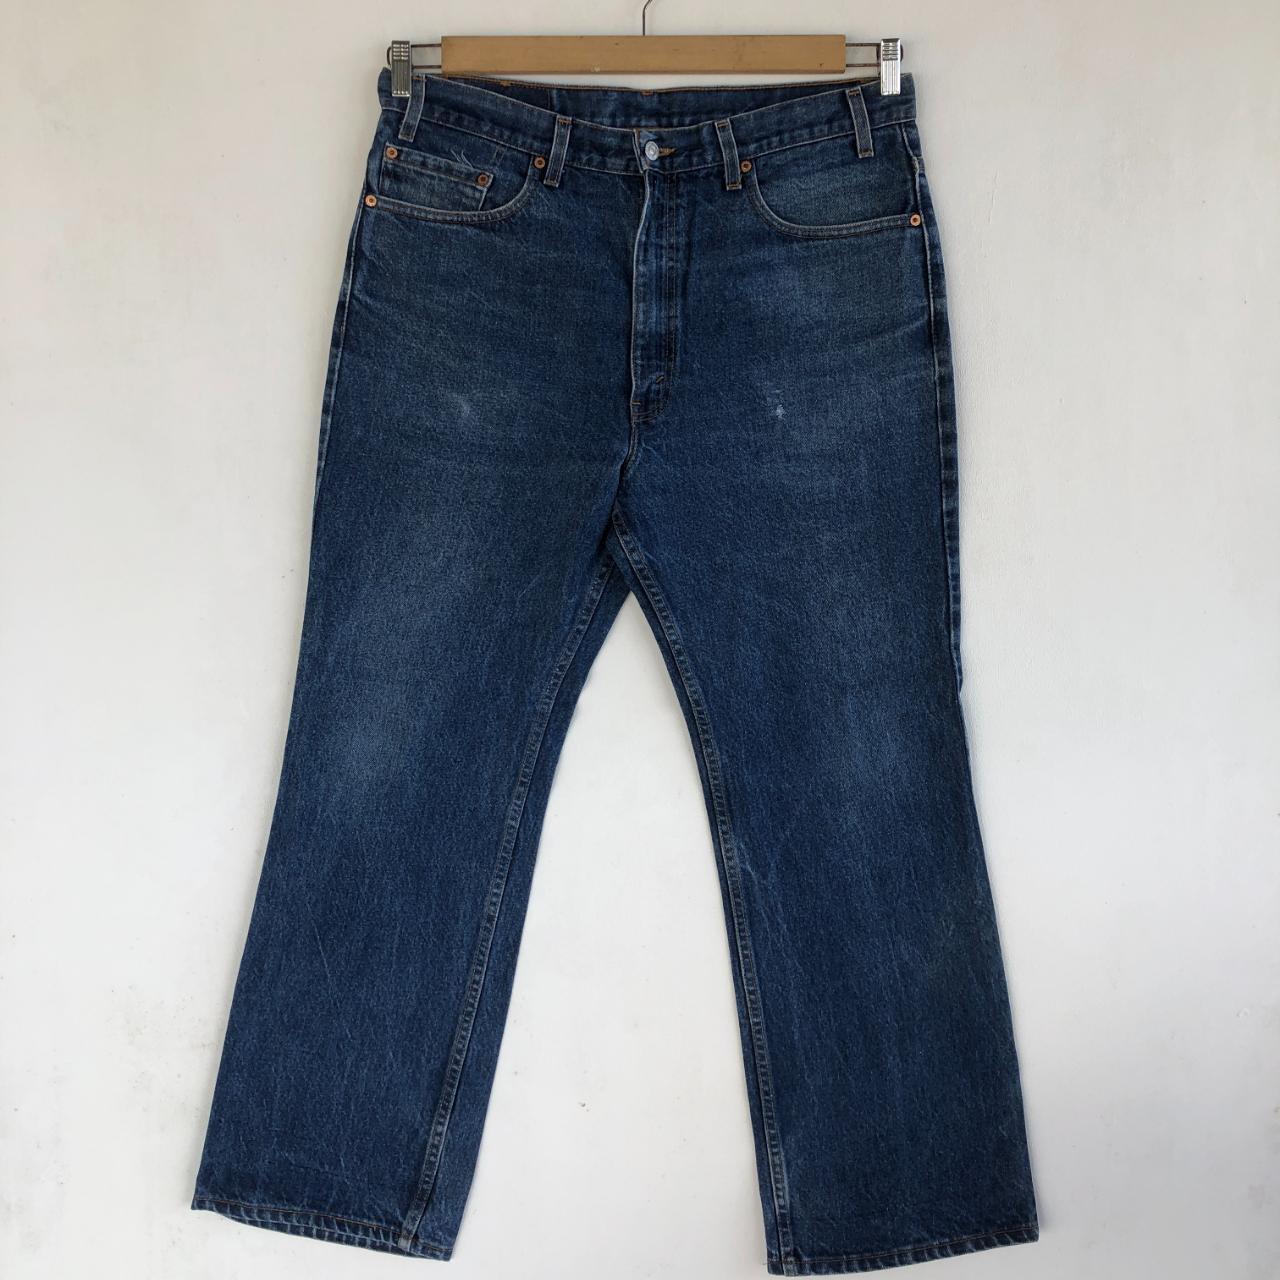 Vintage Levis Jeans Wide Leg Levis 517 Denim Flare... - Depop